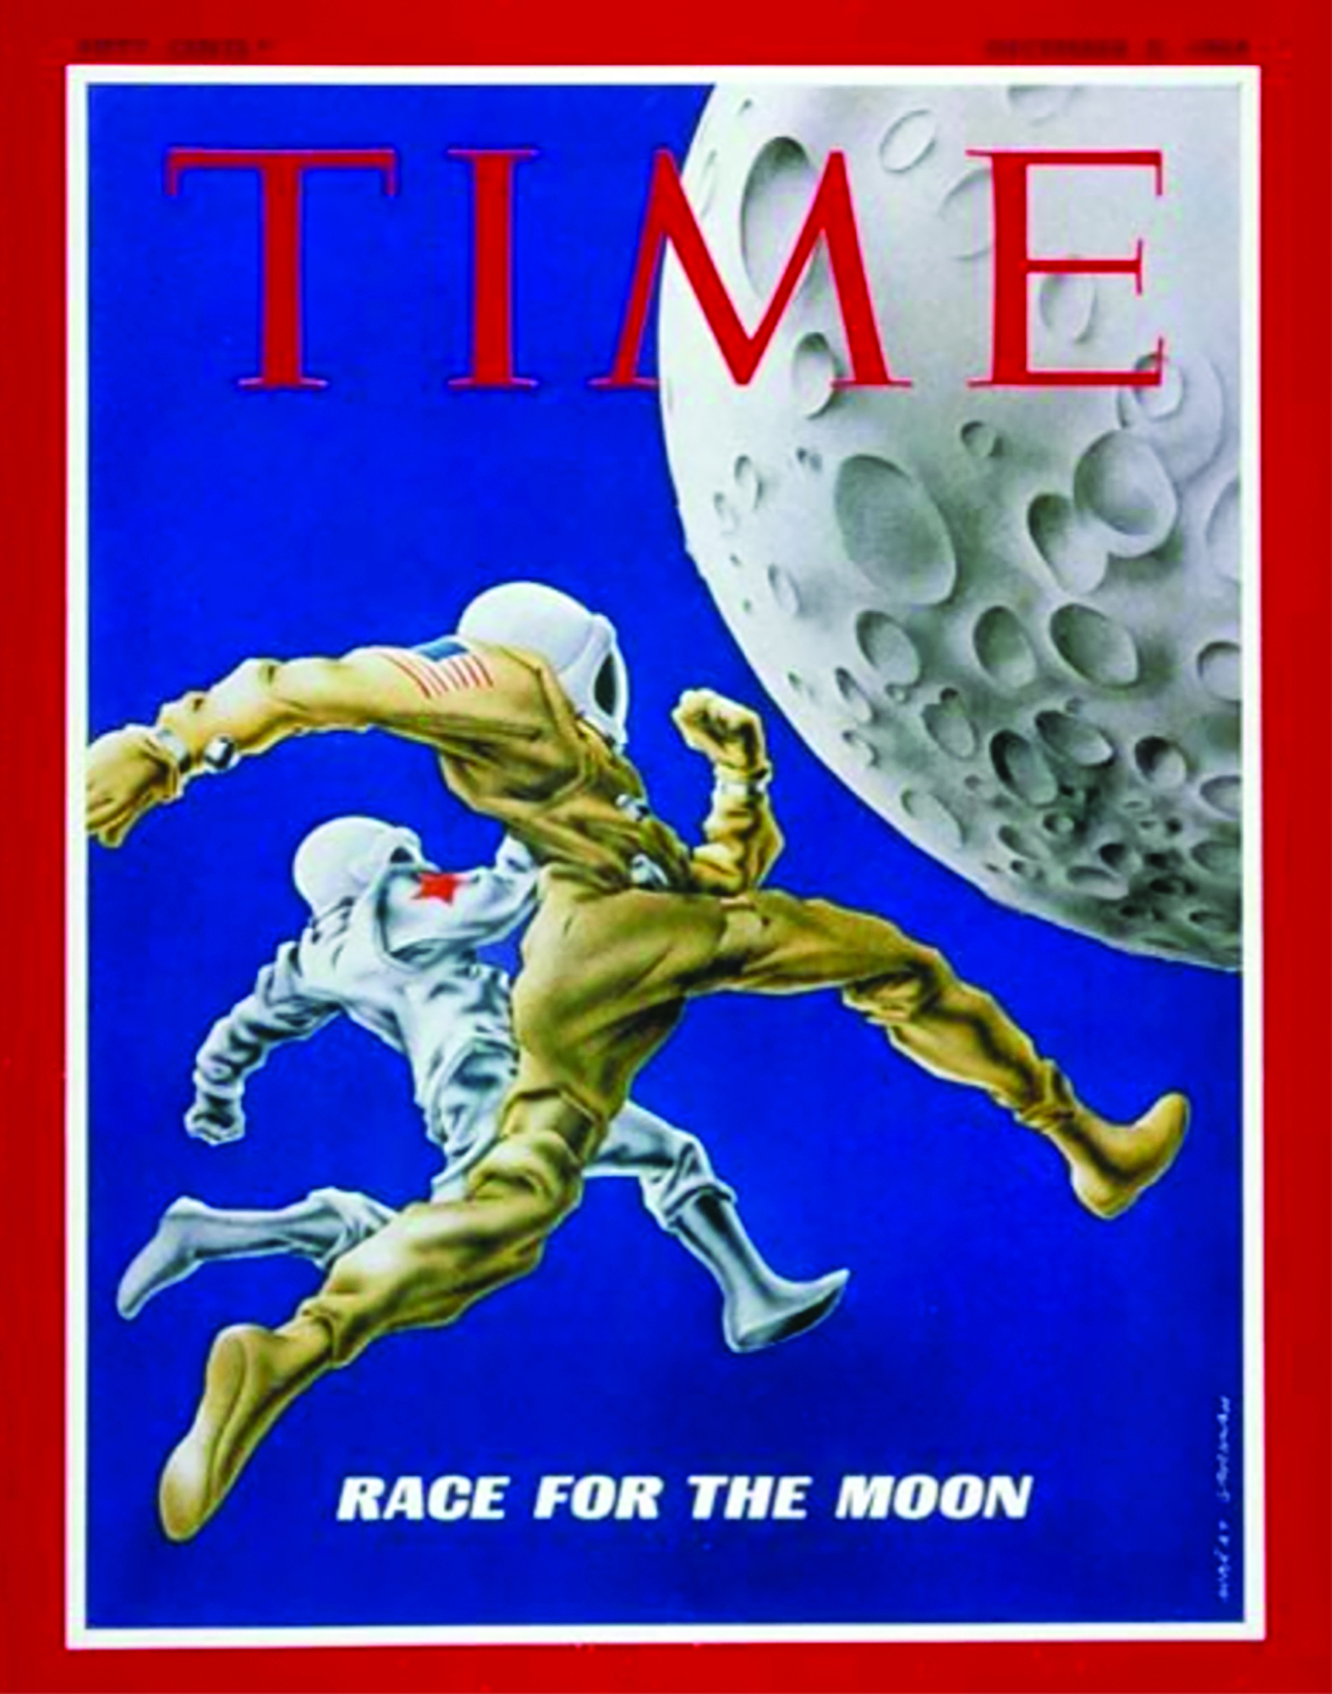 An American astronaut and a Soviet cosmonaut racing toward the moon.